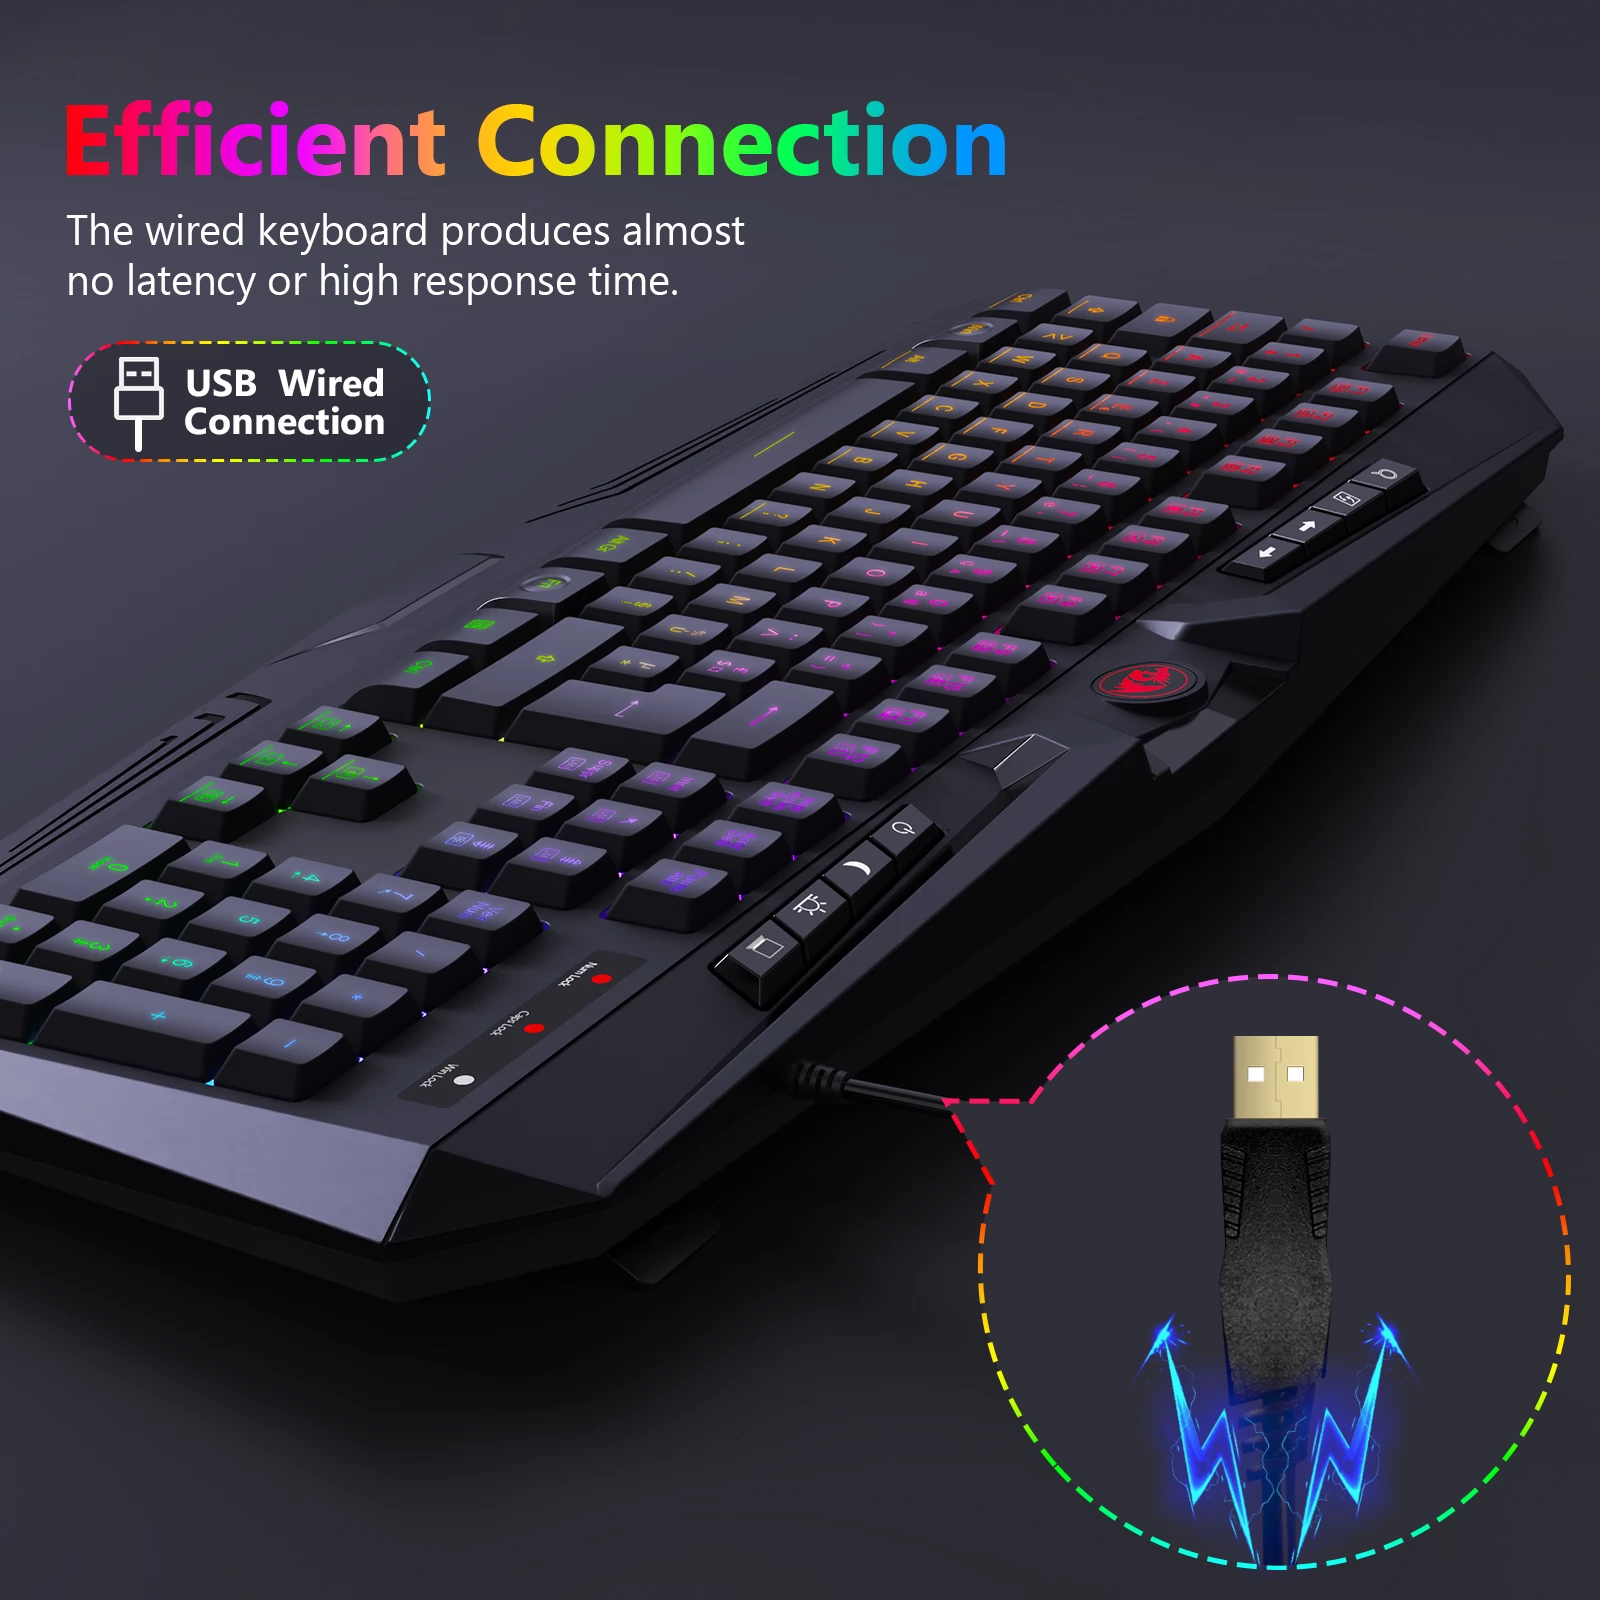 Redragon K503RGB Quiet Gaming Wired Keyboard, RGB-achtergrondverlichting met multimediatoetsen, 105 toetsen AZERTY FR-indeling